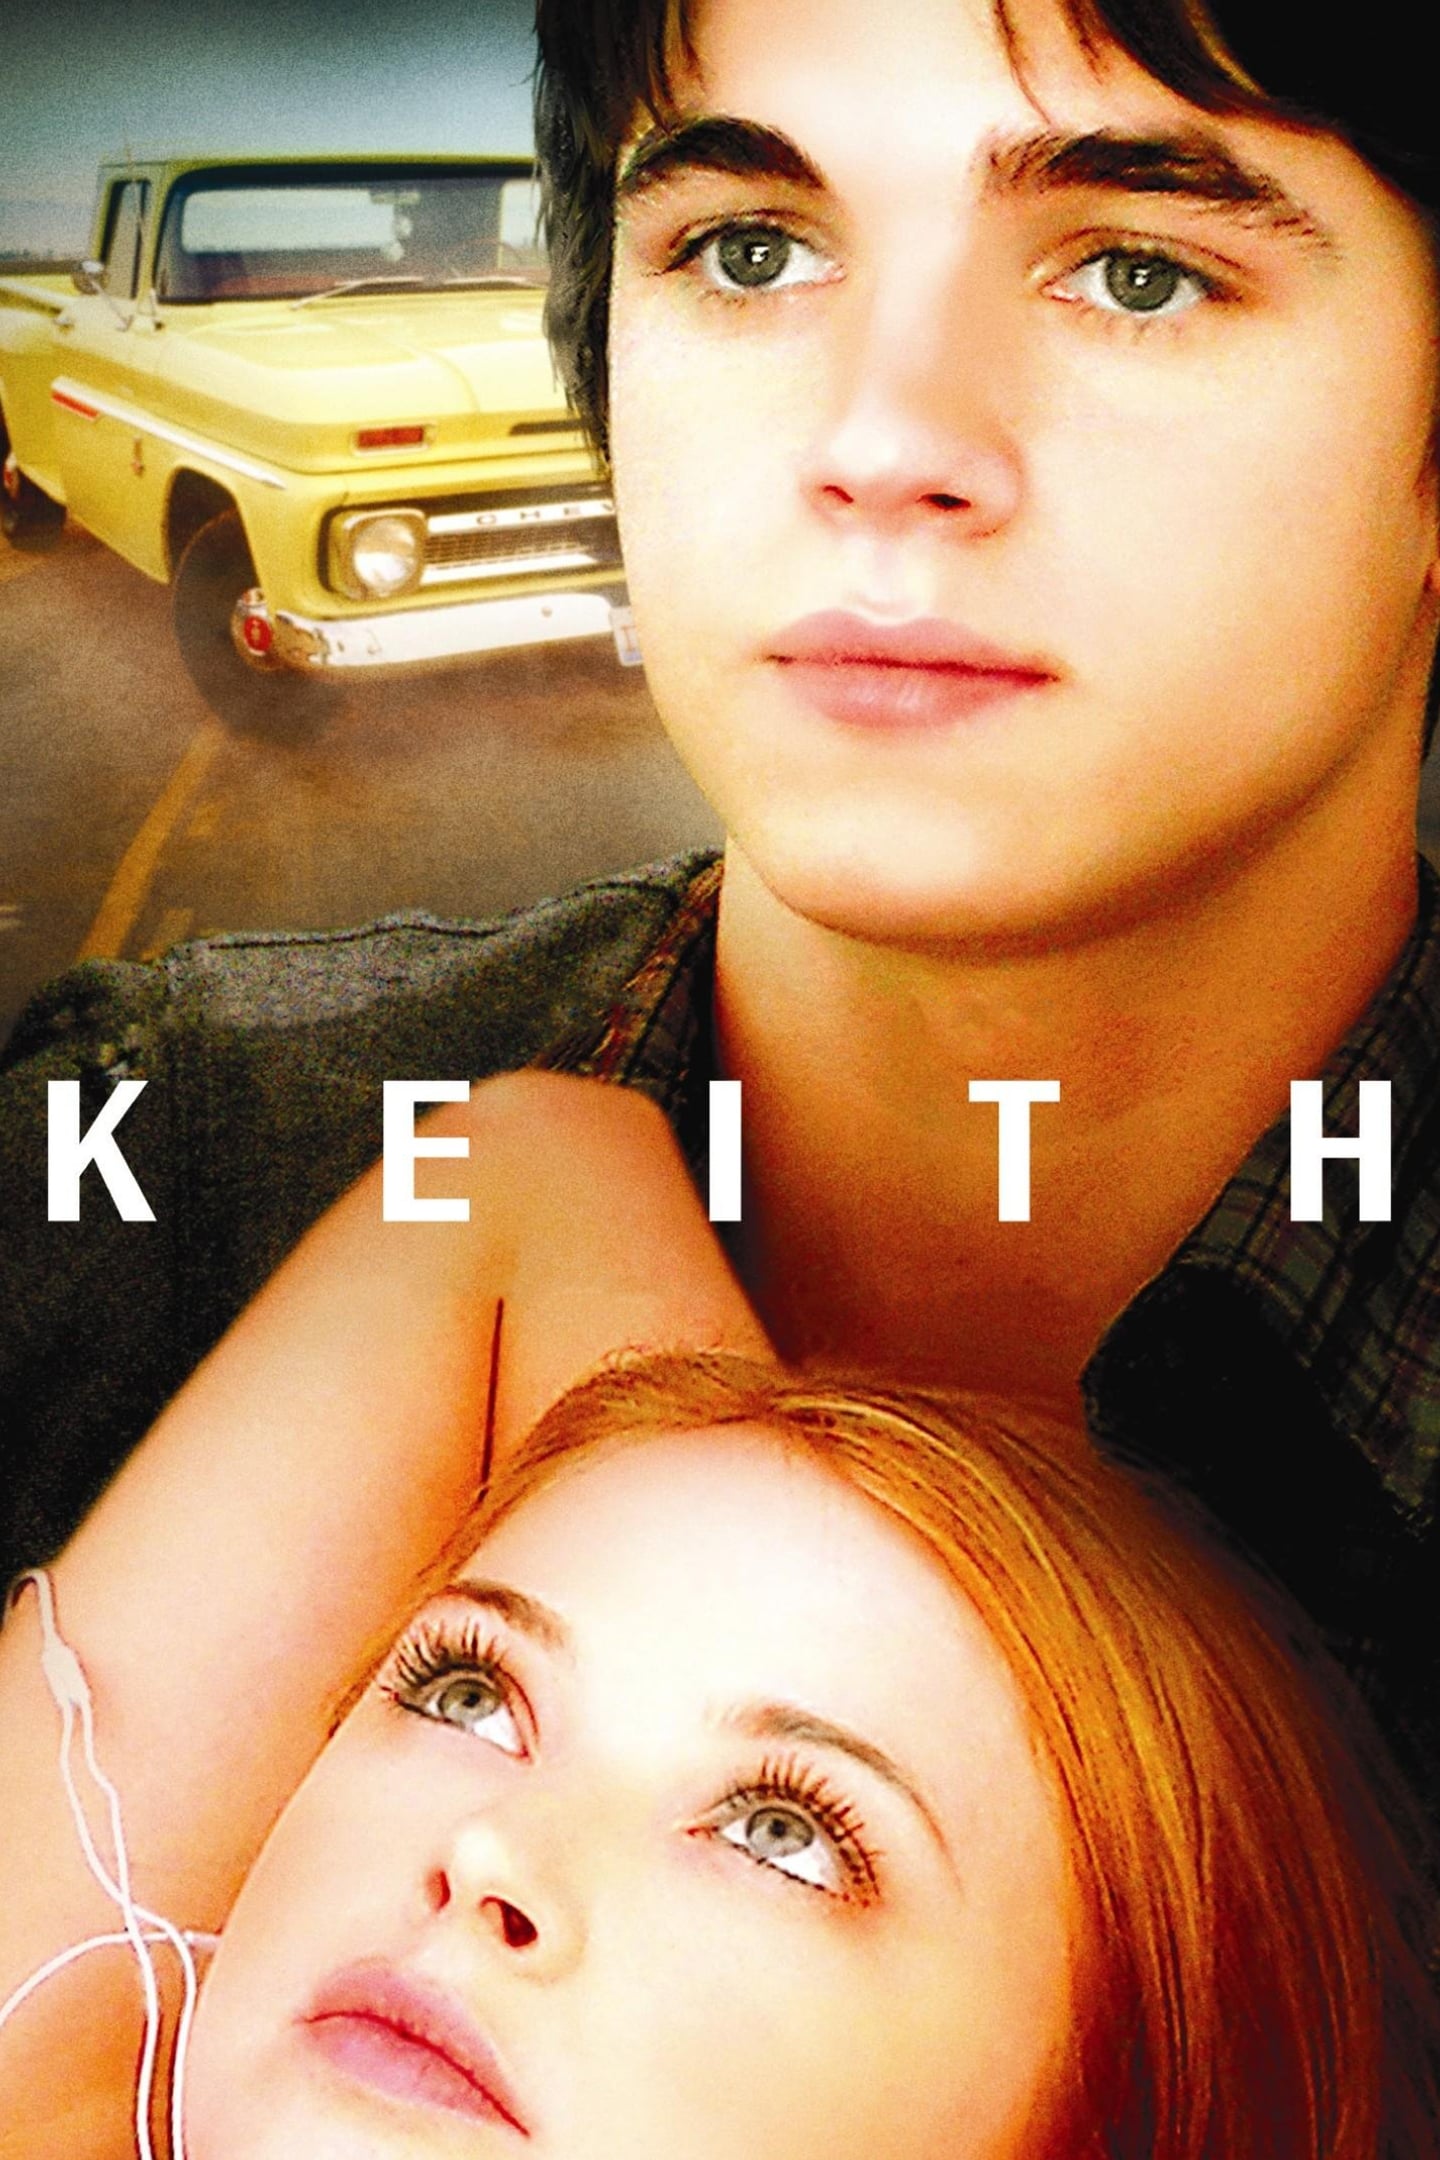 Keith